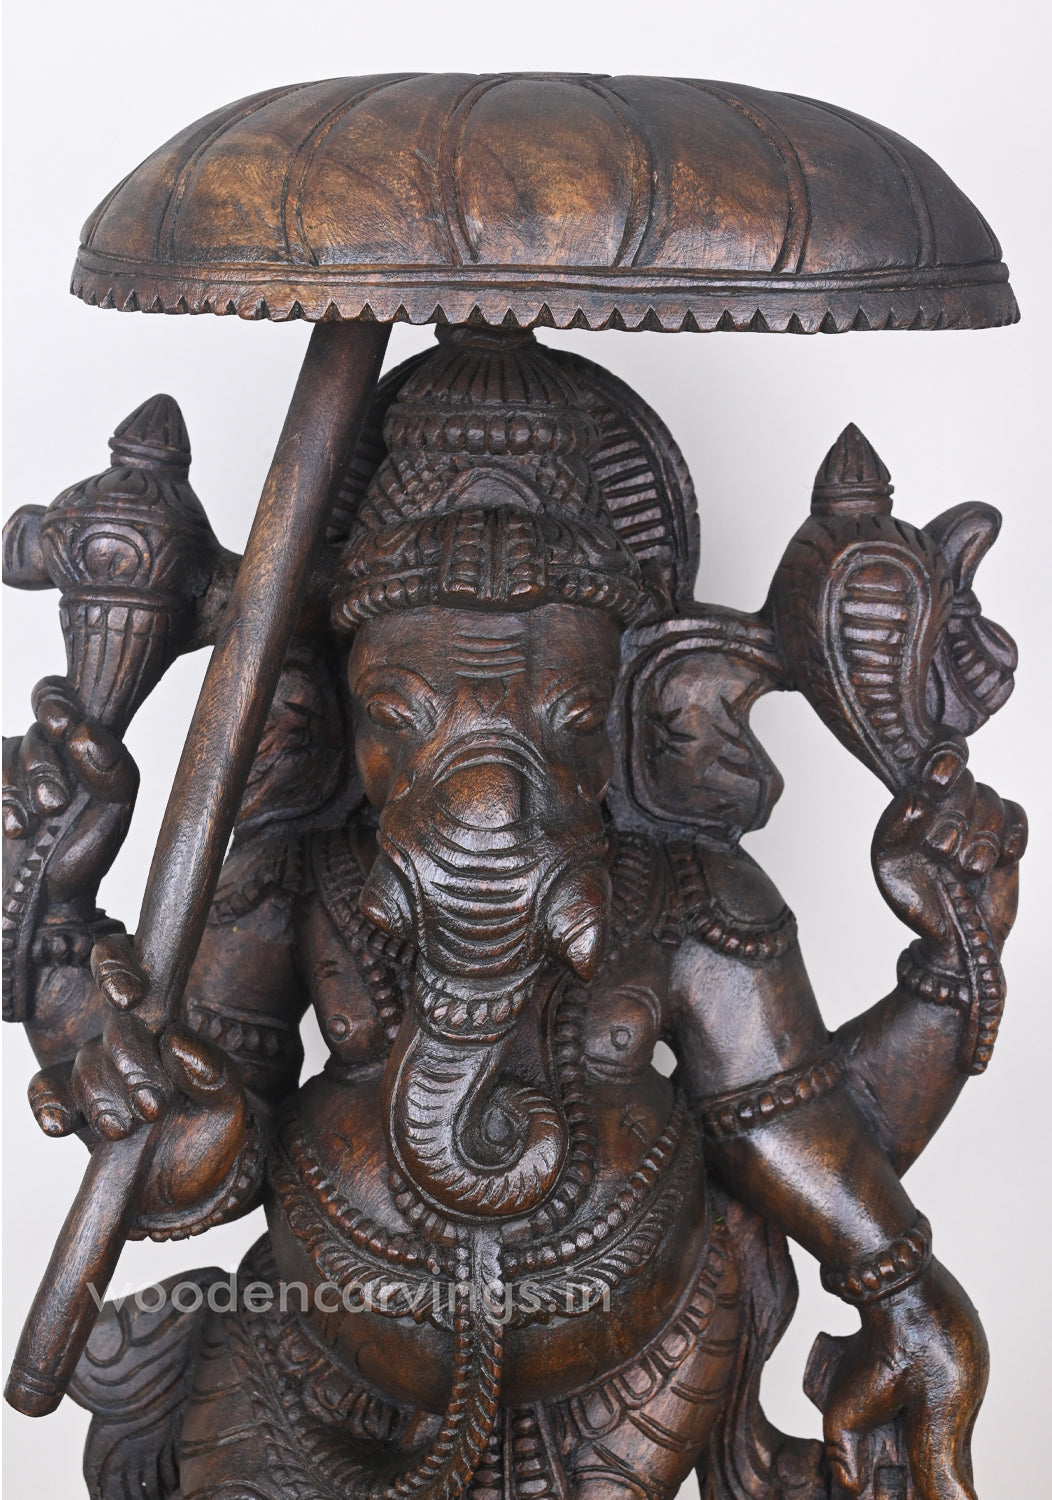 Masterpiece of Standing Umbrella Ganesha Holding Kamandalam Wooden Sculpture 25"